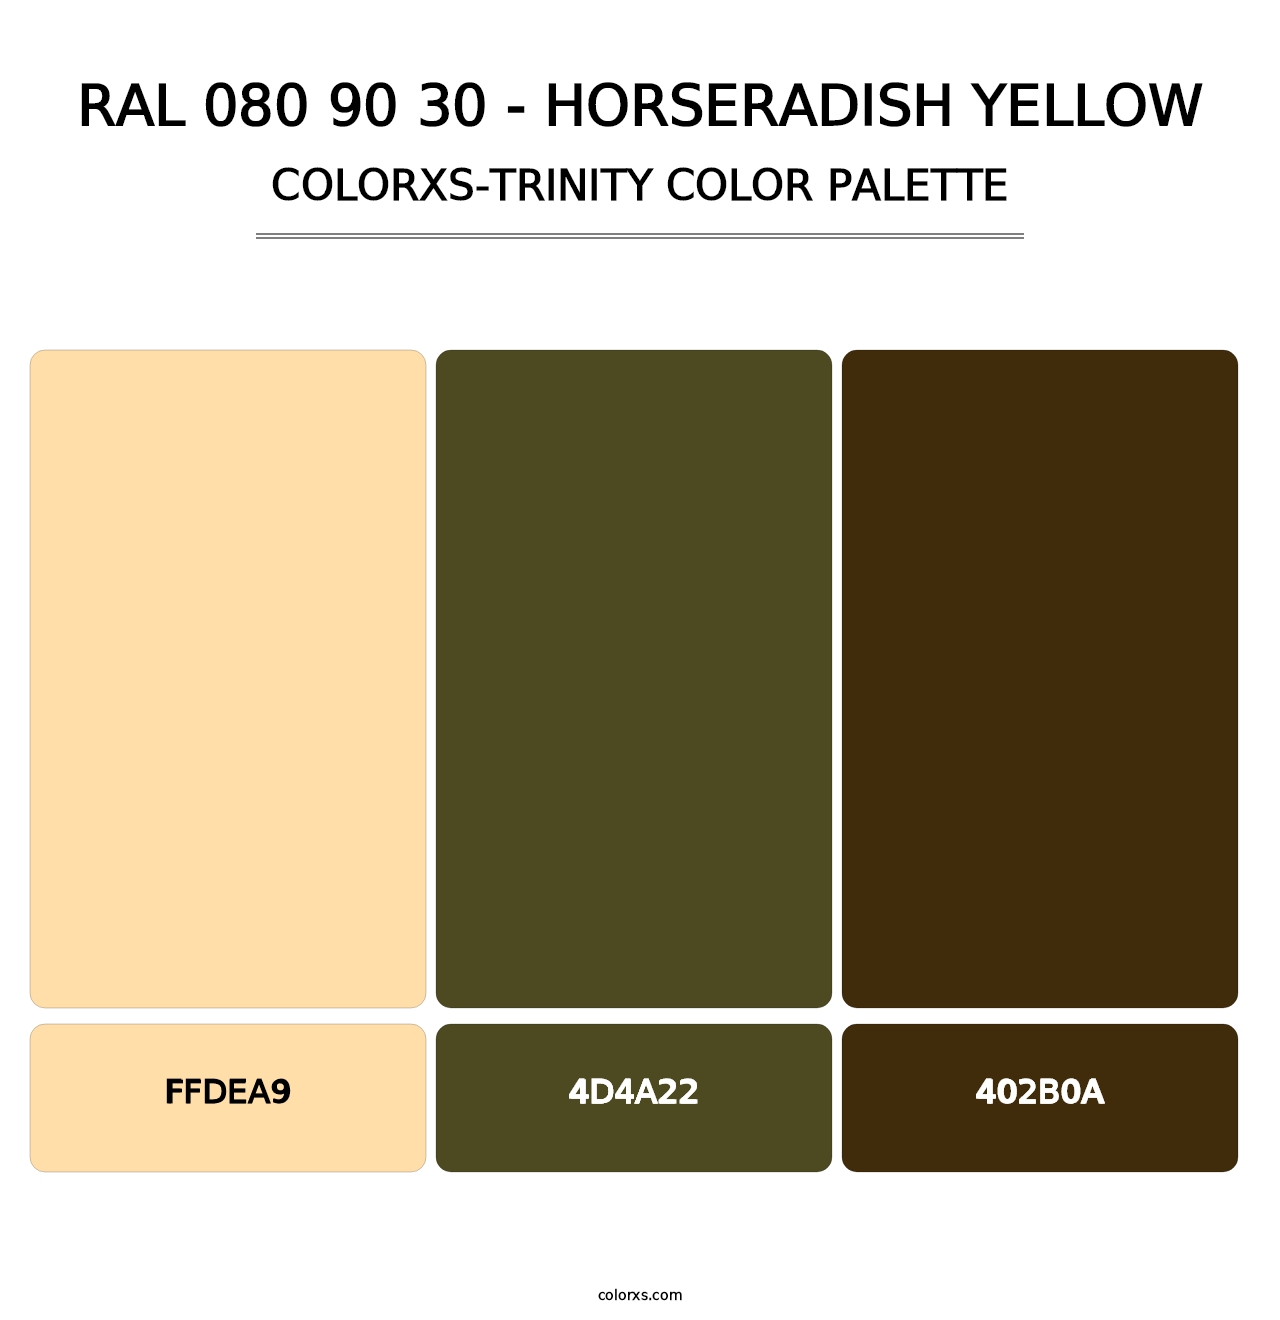 RAL 080 90 30 - Horseradish Yellow - Colorxs Trinity Palette